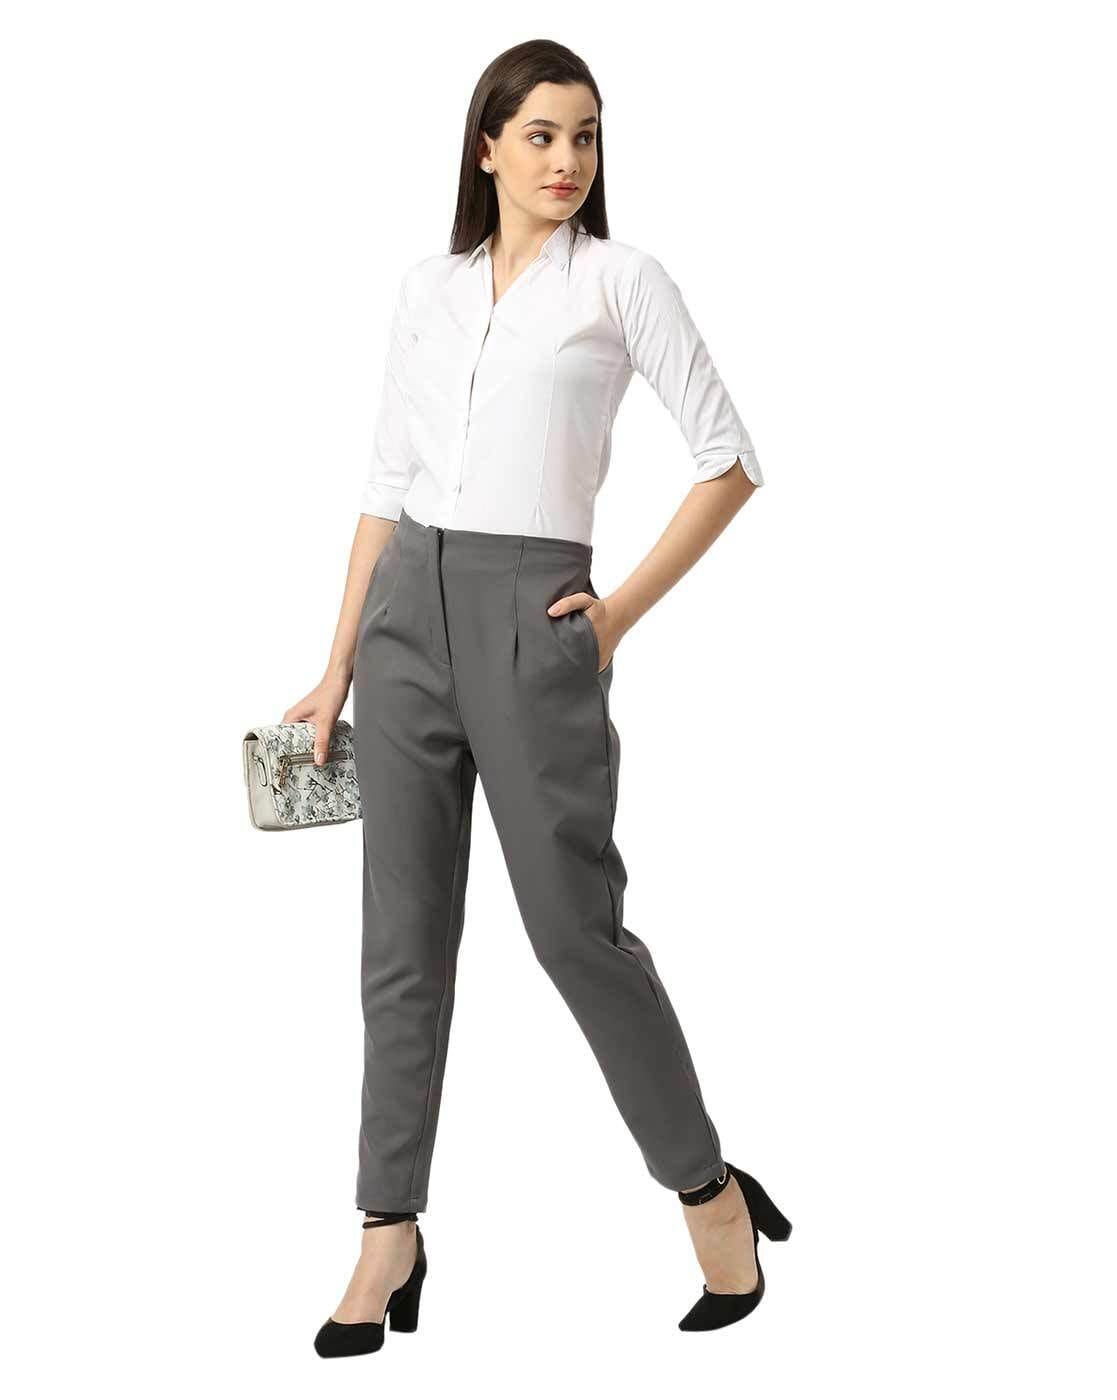 Cotton Grey Ladies Formal Pant at Rs 450/piece in Noida